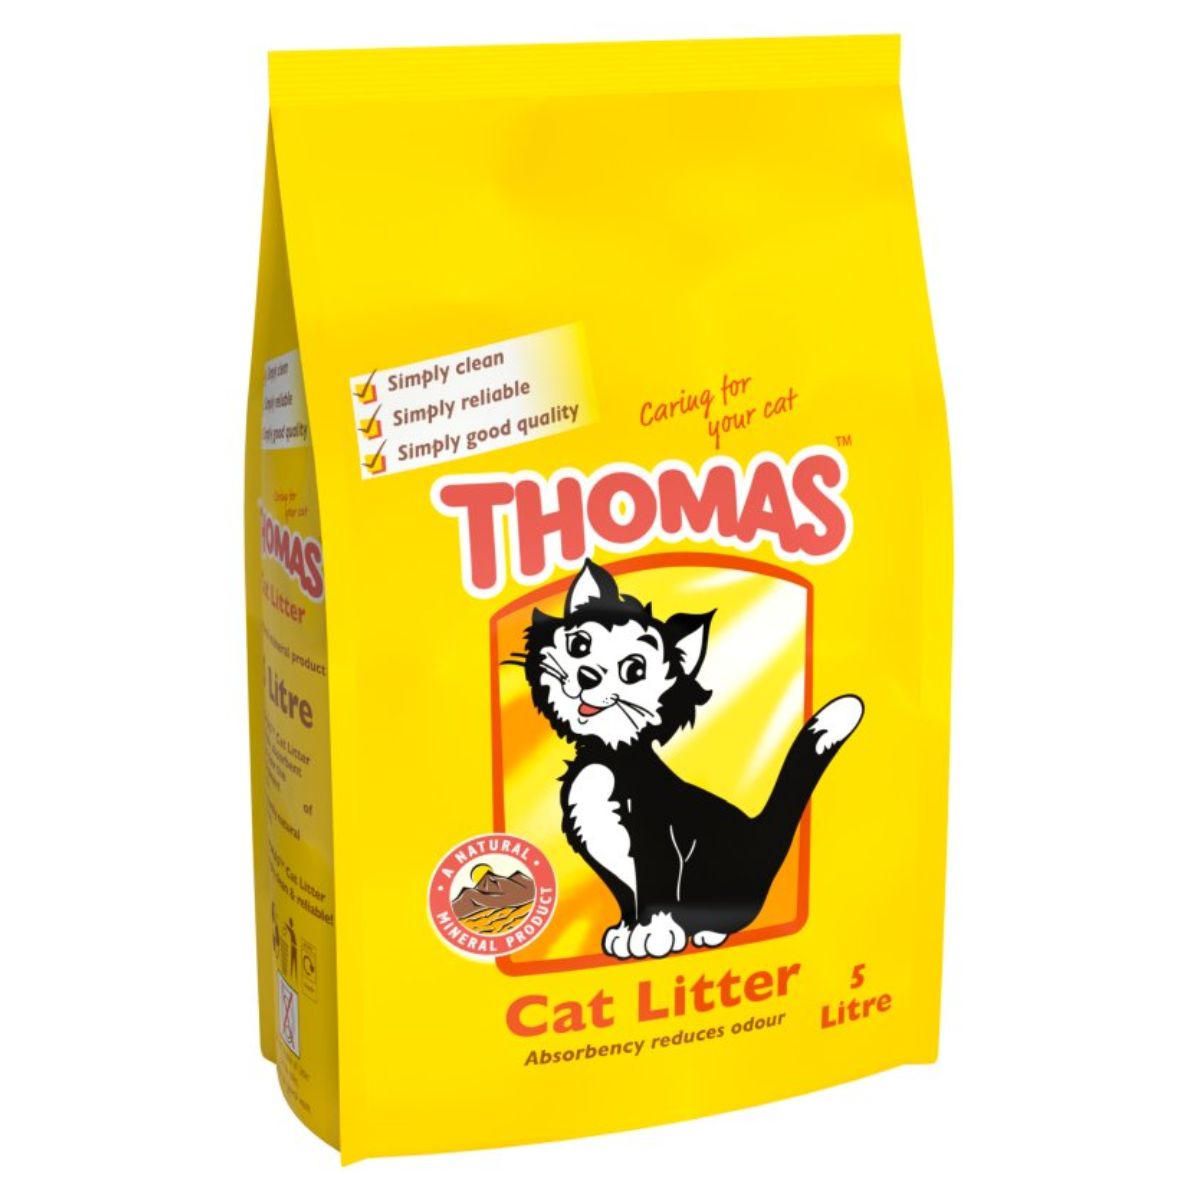 Thomas - Cat Litter - 5L 5 kg.